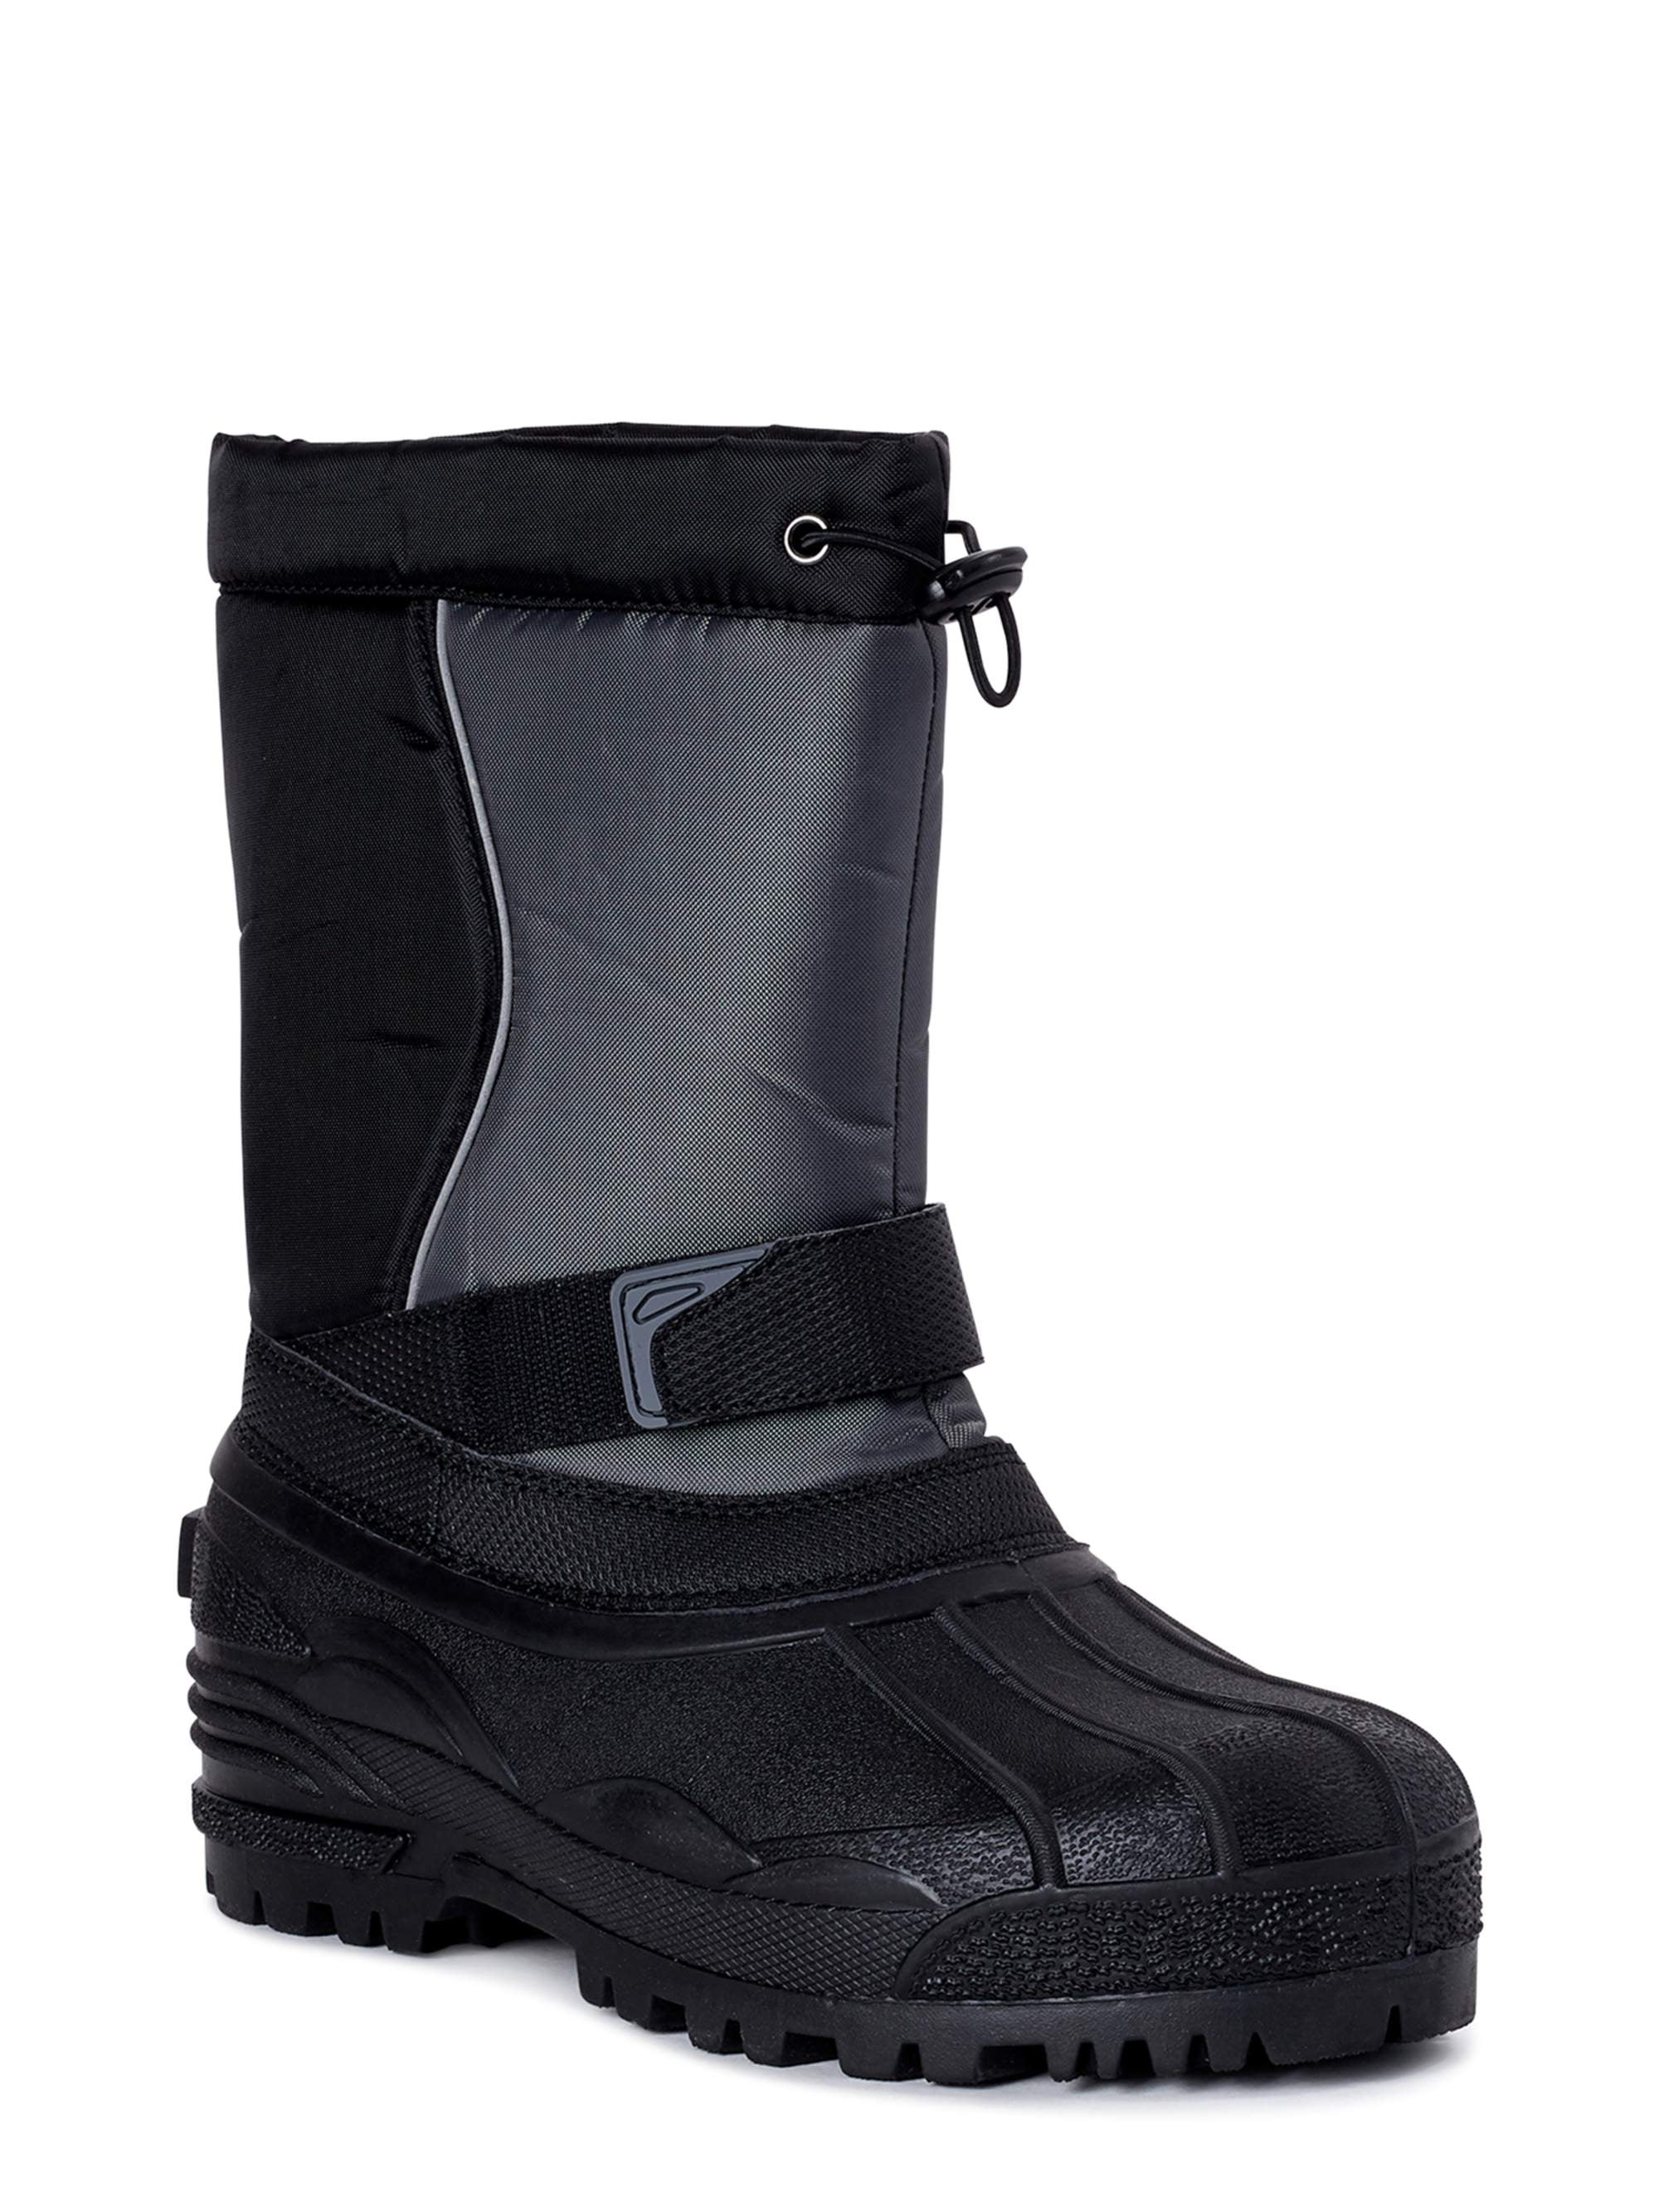 George Men's Essential Winter Boots - Walmart.com